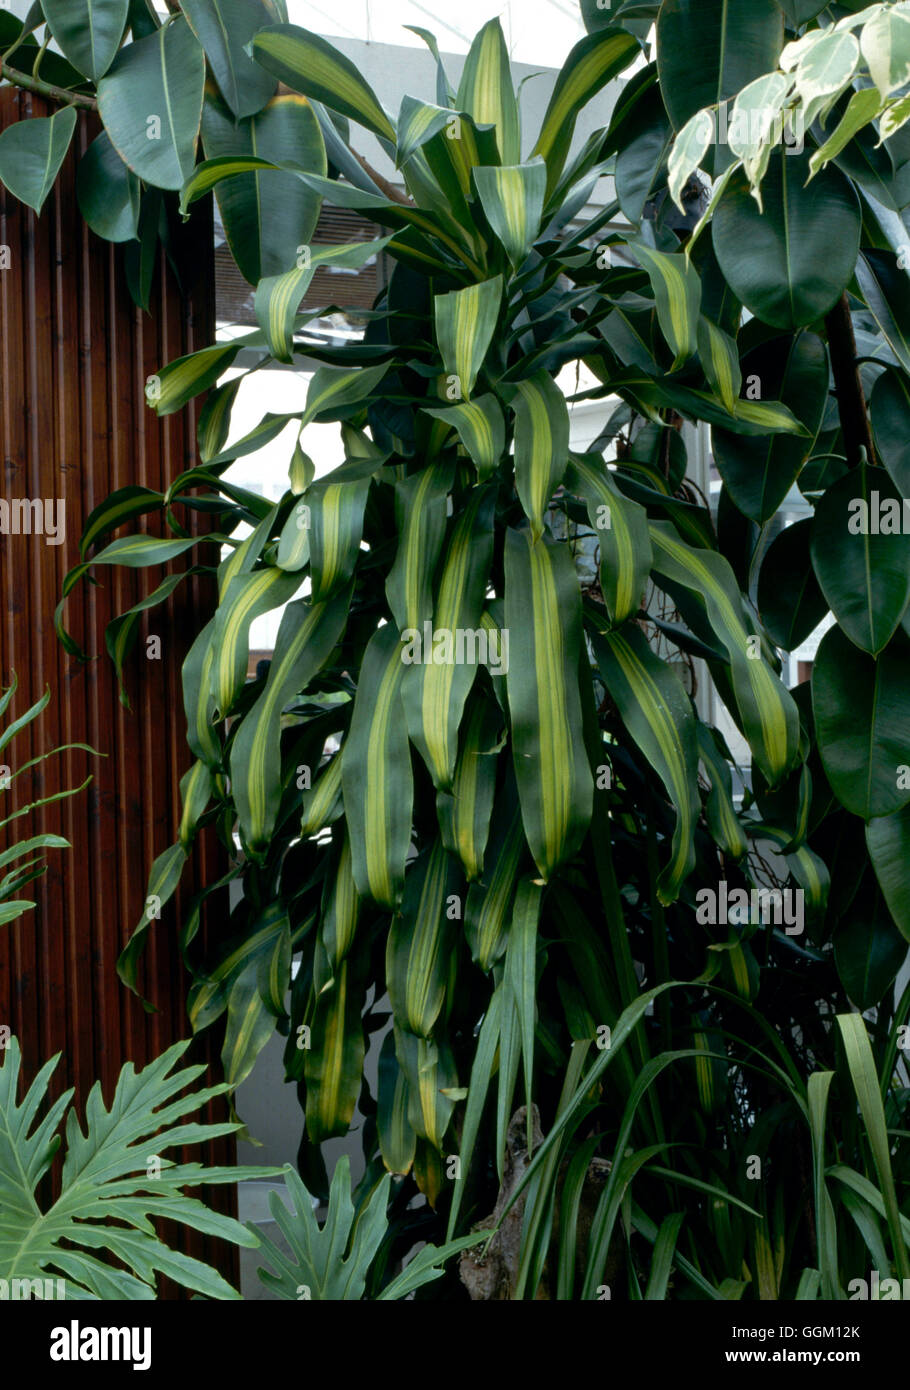 Dracaena fragrans - 'Massangeana' pianta di mais PAL032010 Foto Stock